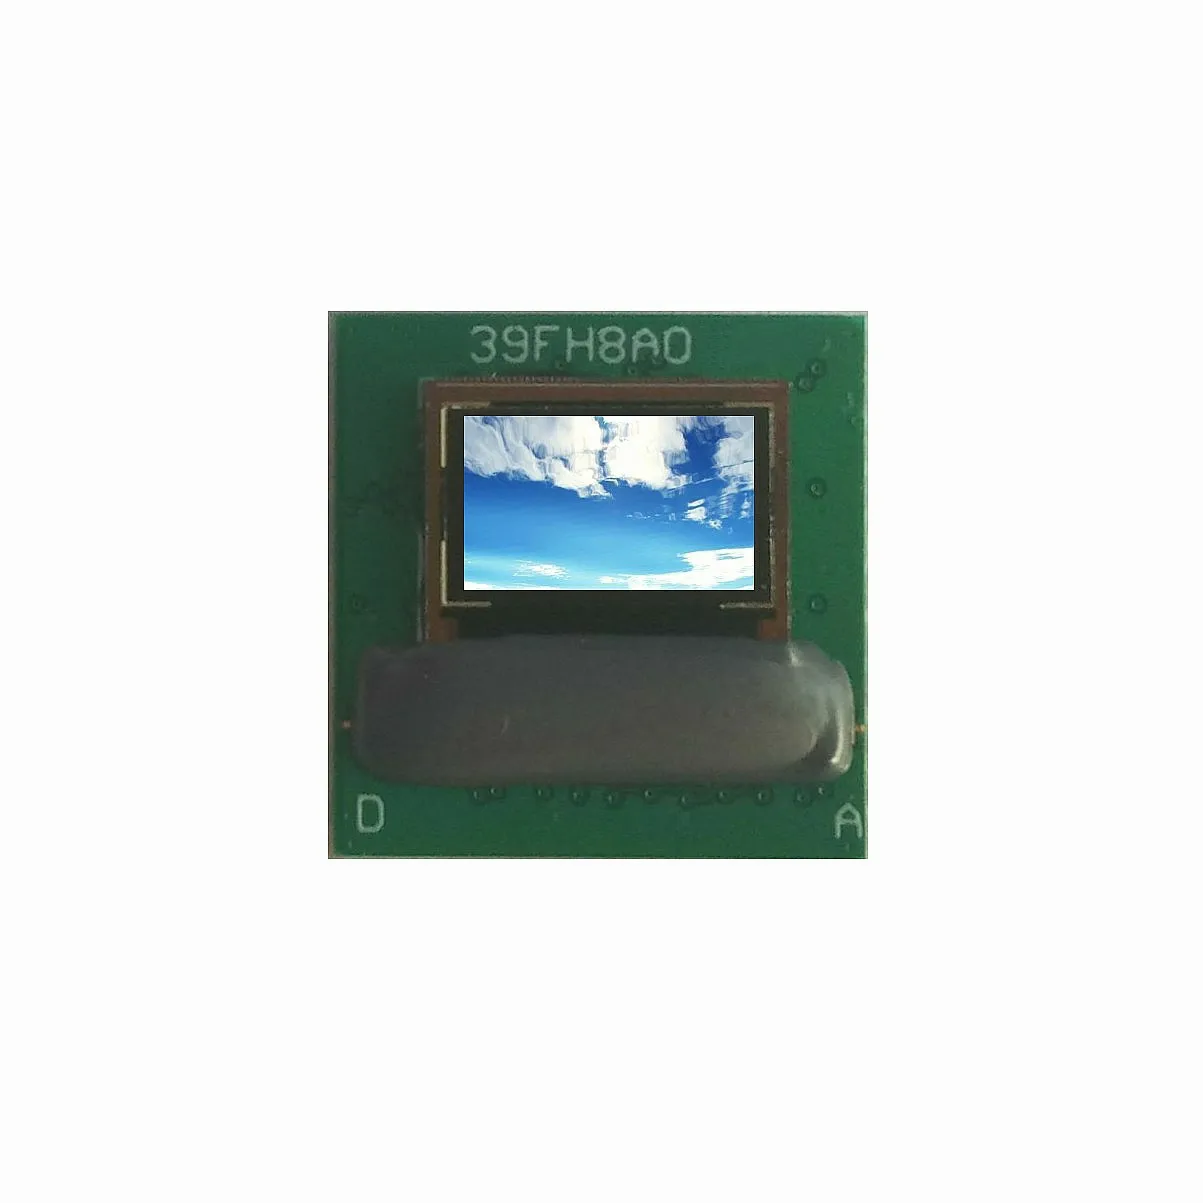 Oled Microdisplay Arvr Display Full Hd Oled Panel 1920x1080 Mipi Or I2c Interface 167m Full 